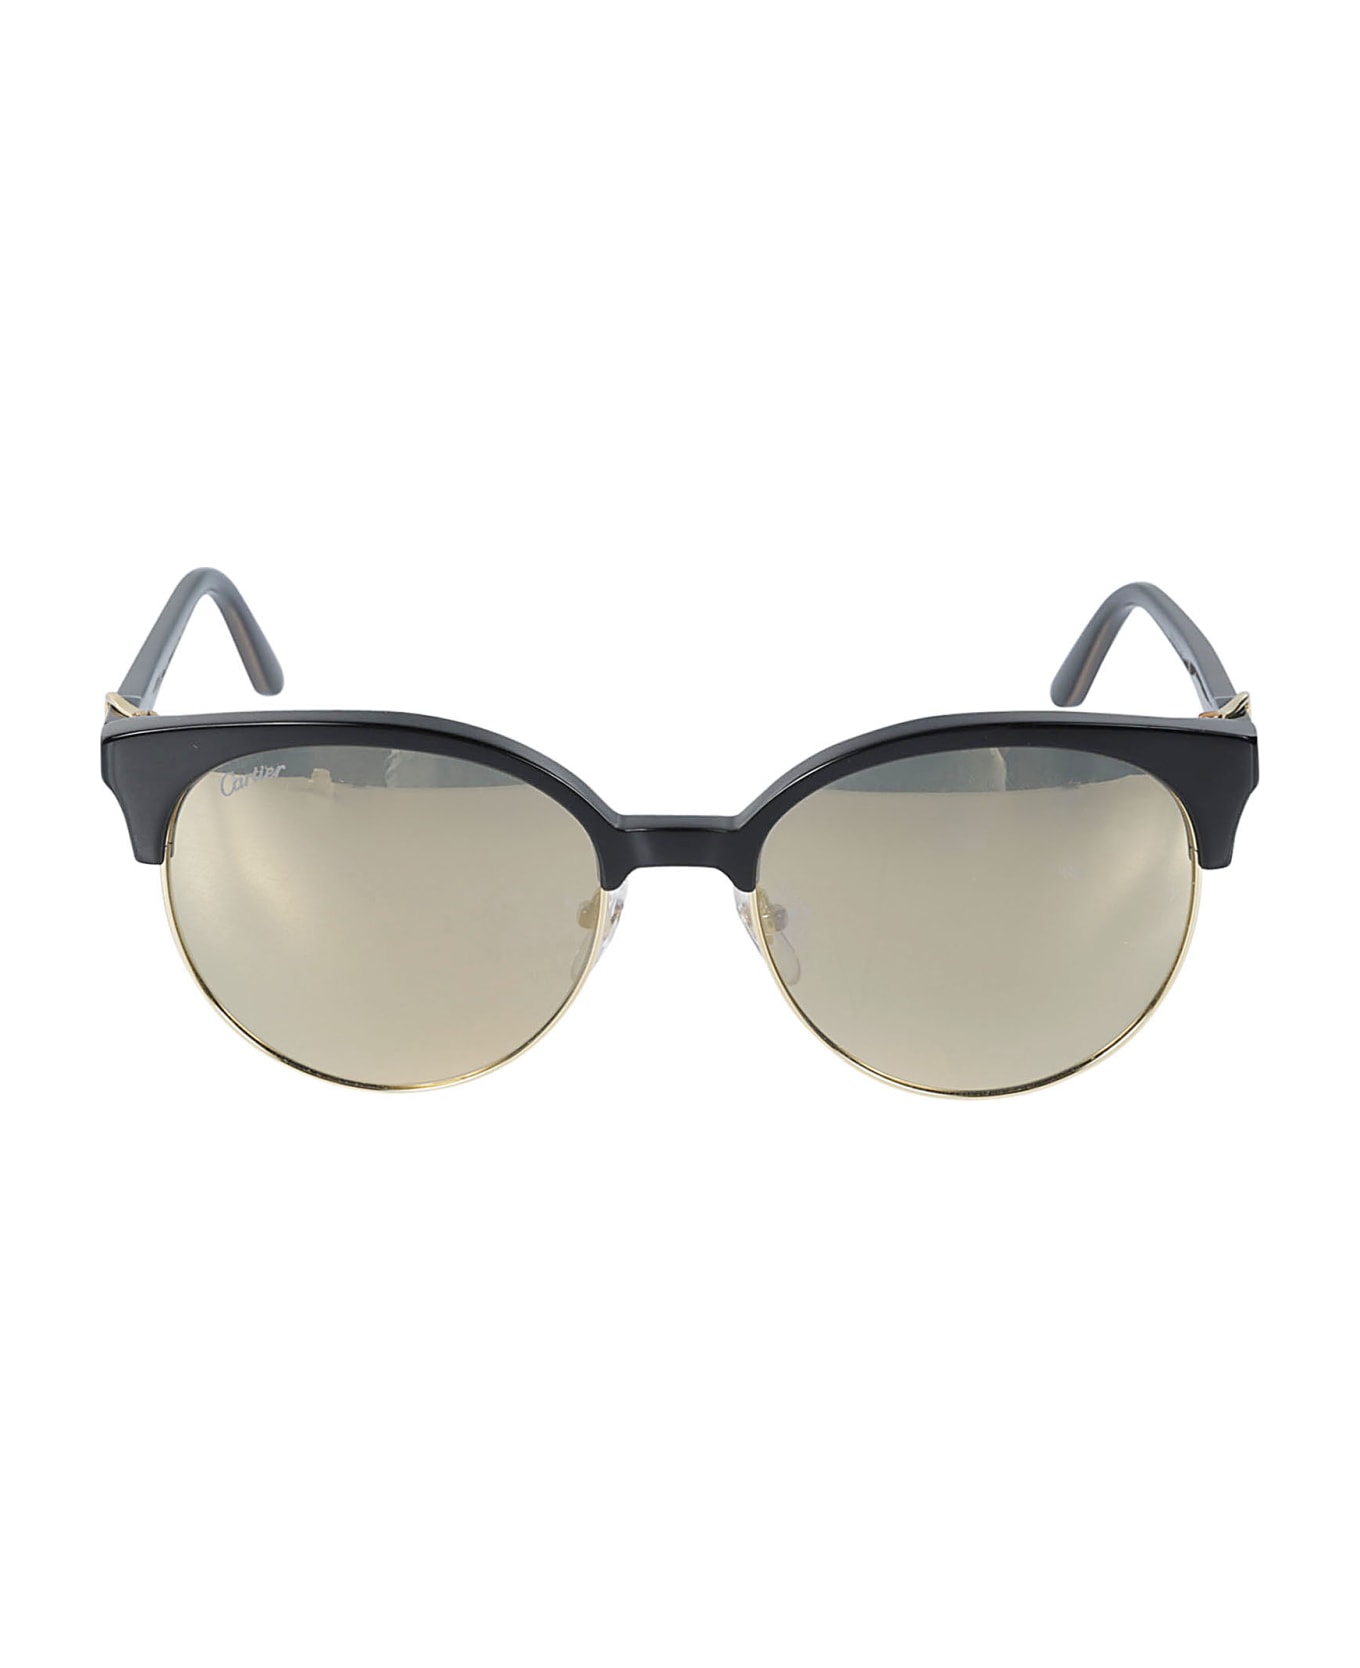 Cartier Eyewear Clubmaster Style BB0181S Sunglasses - Black